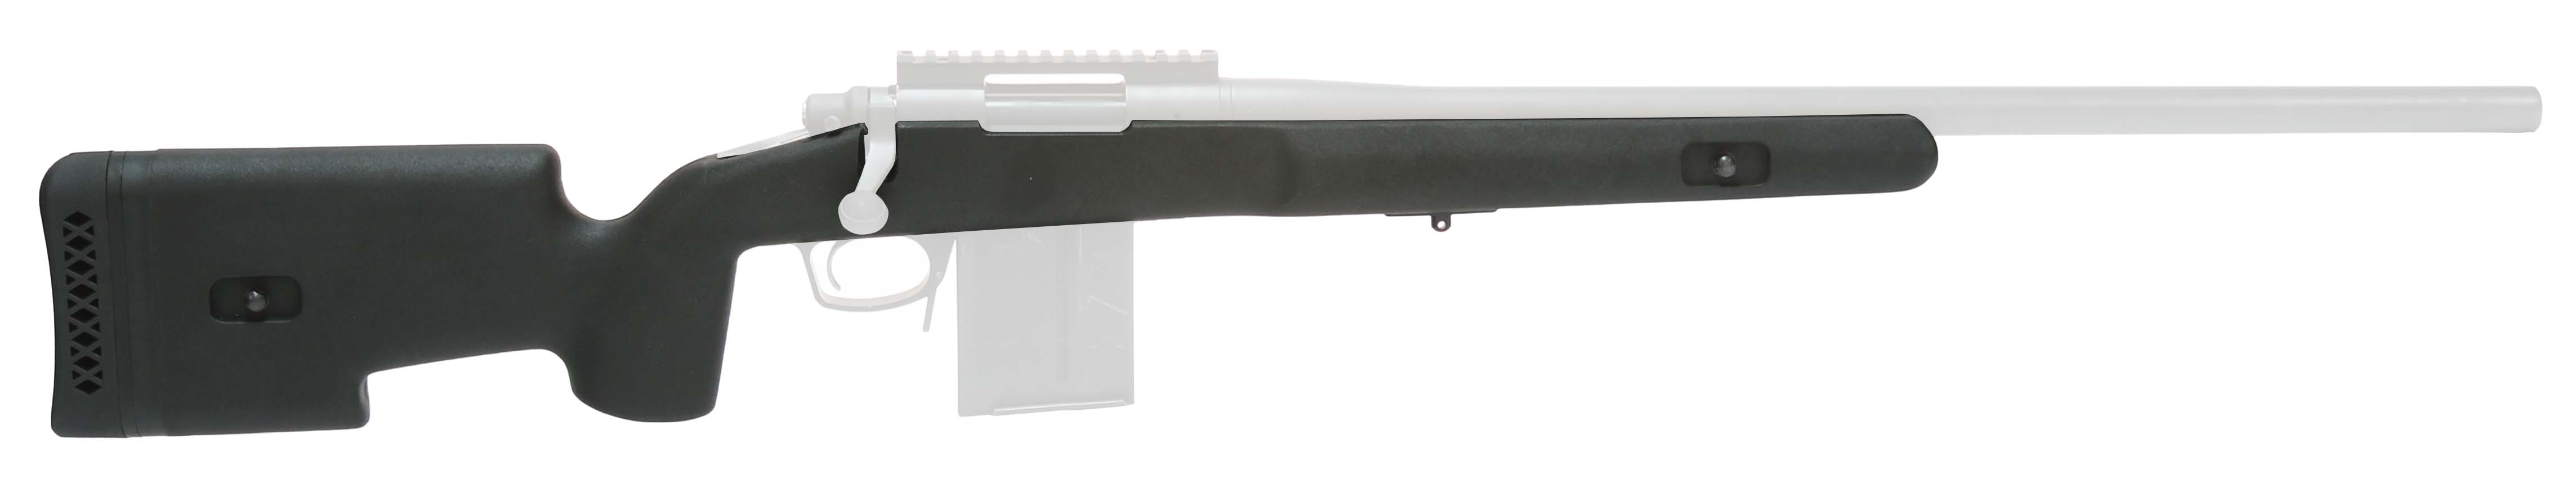 Choate Tool Tactical Remington 700 S A Cdi Detachable Magazine